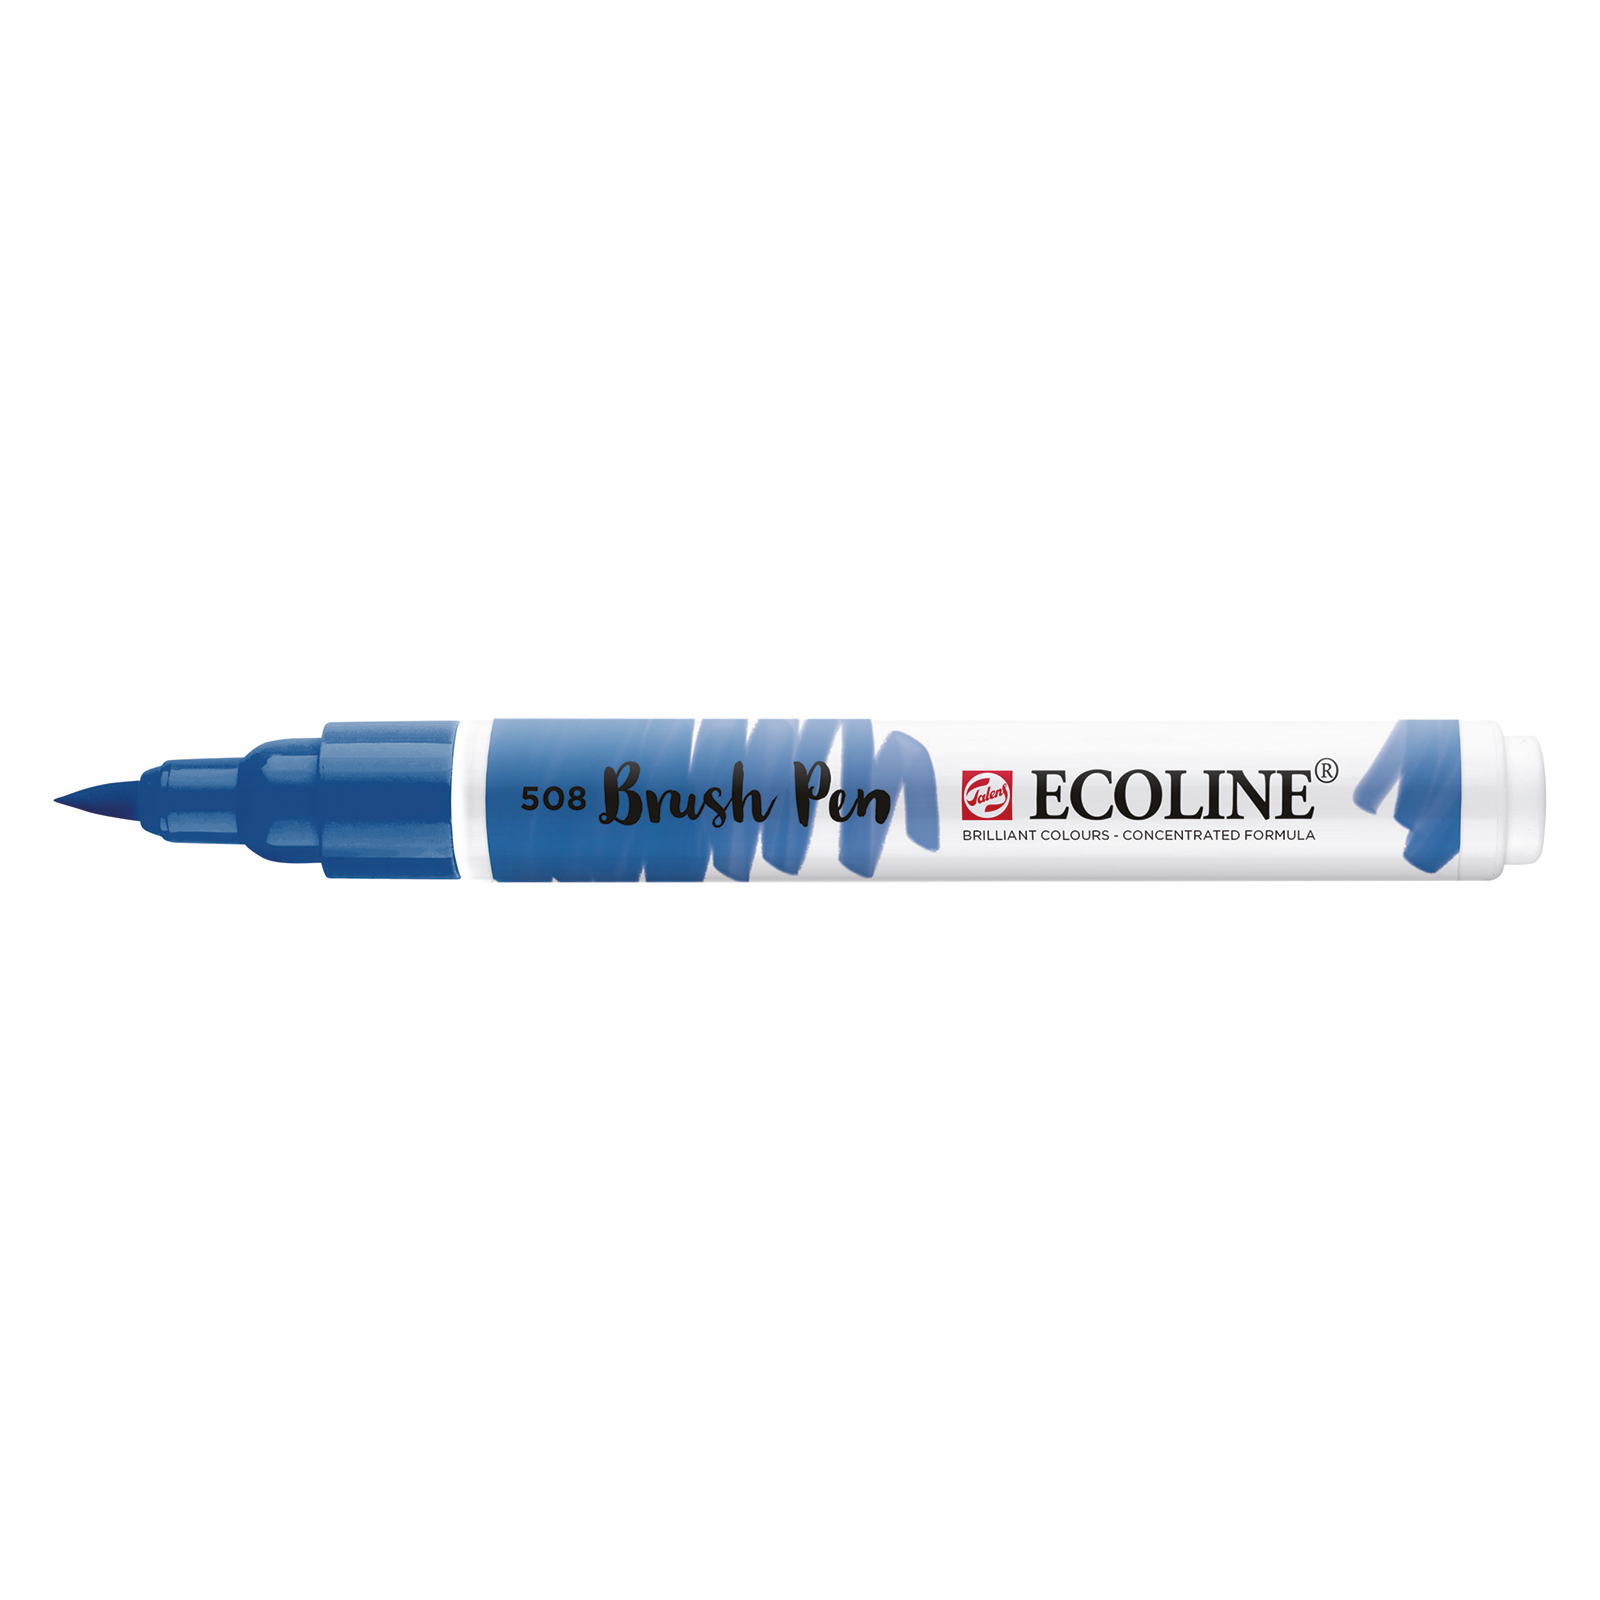 Ecoline • Brush Pen Prussian Blue 508